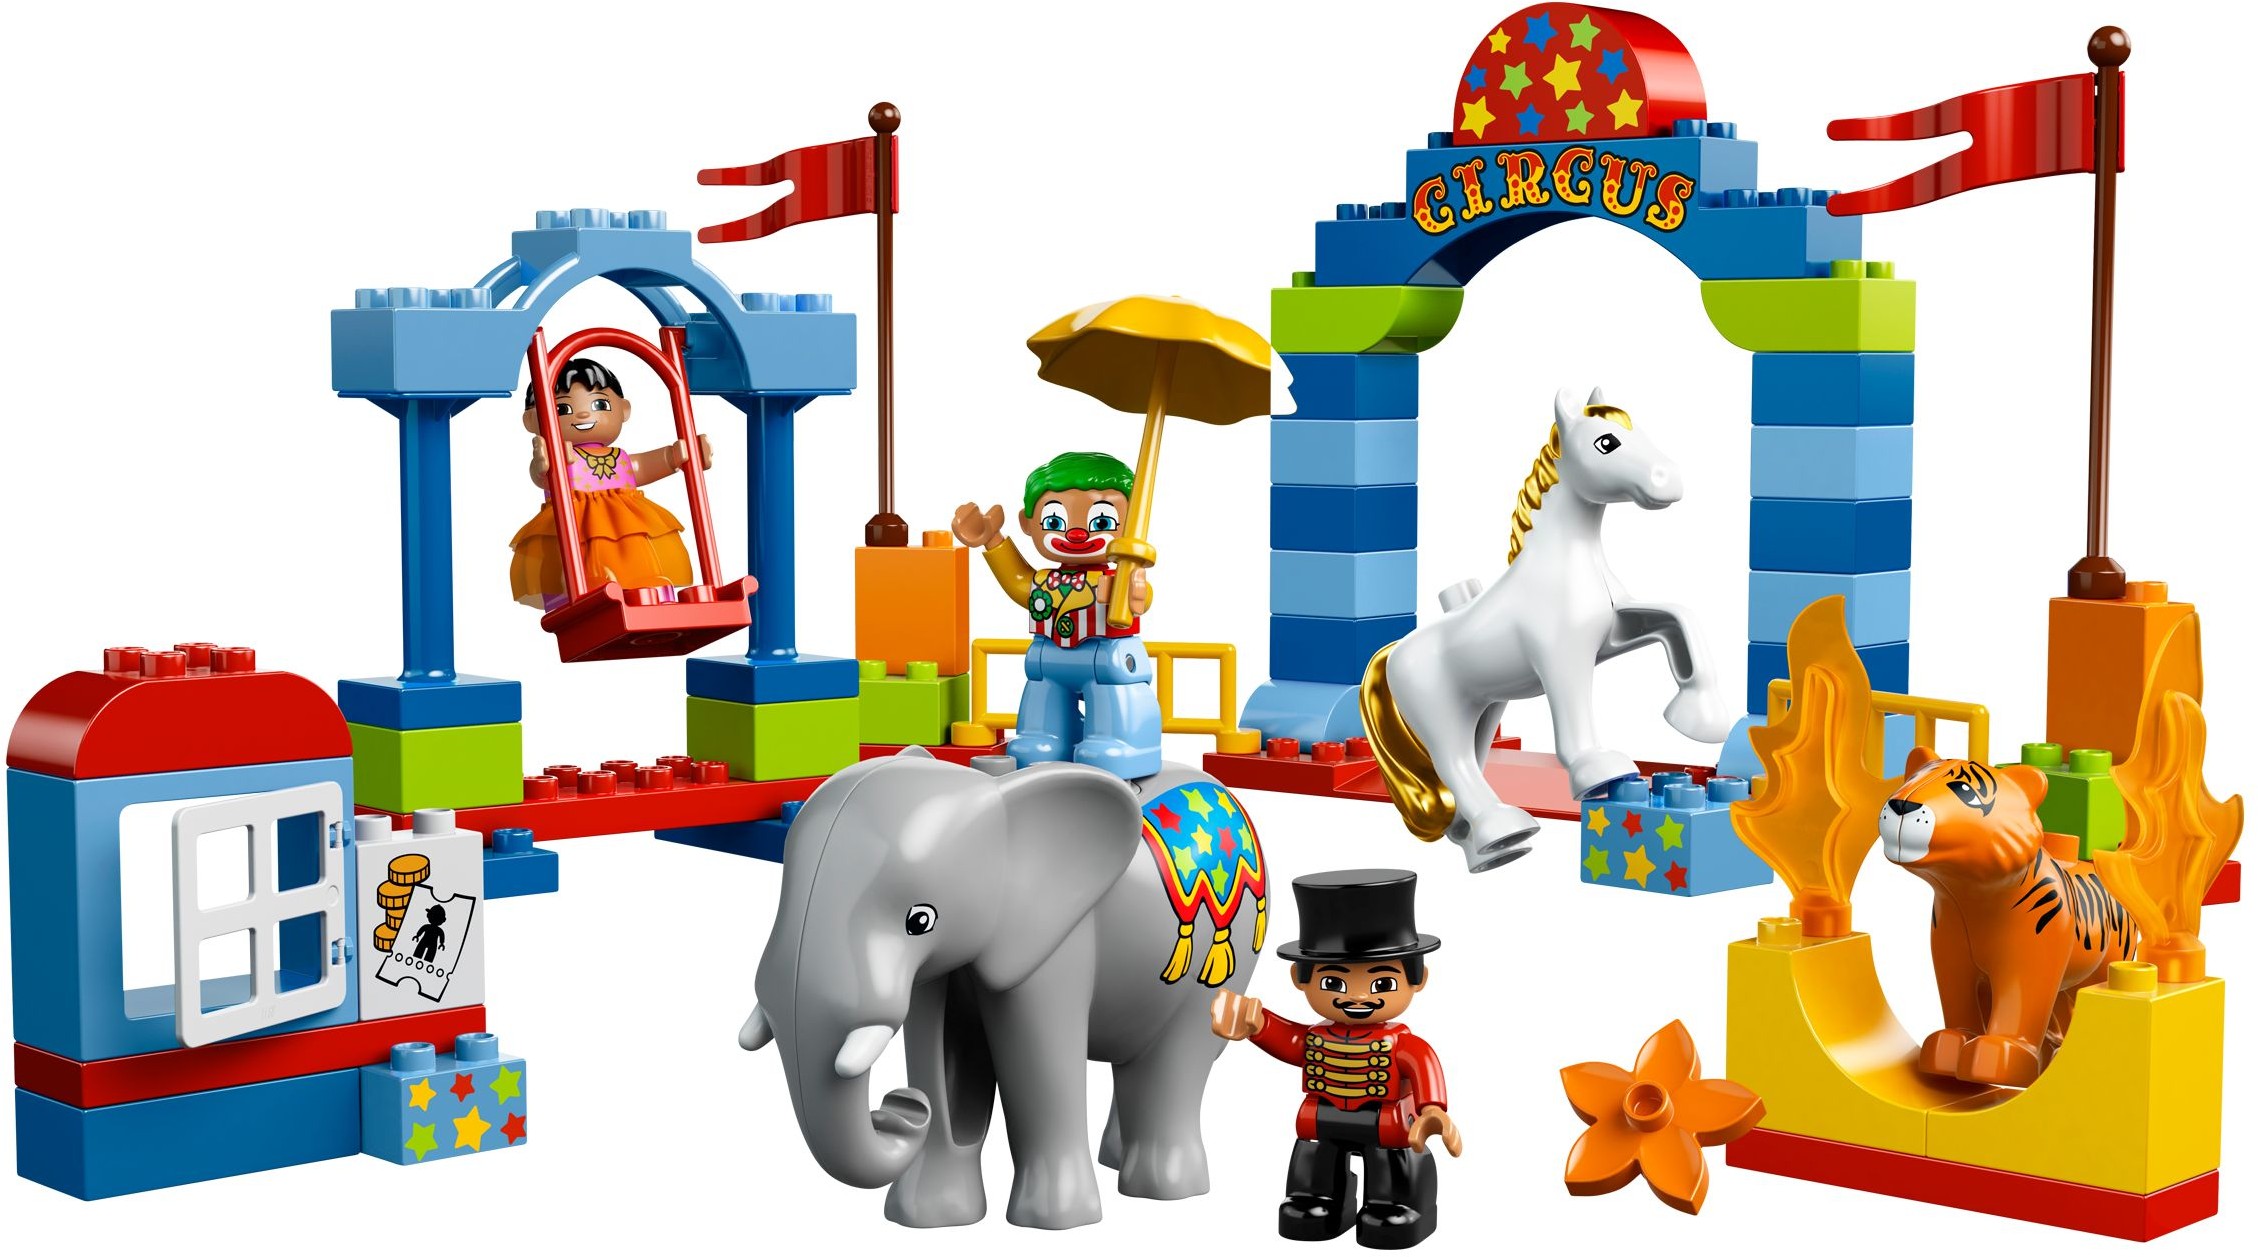 LEGO Circus Brickset